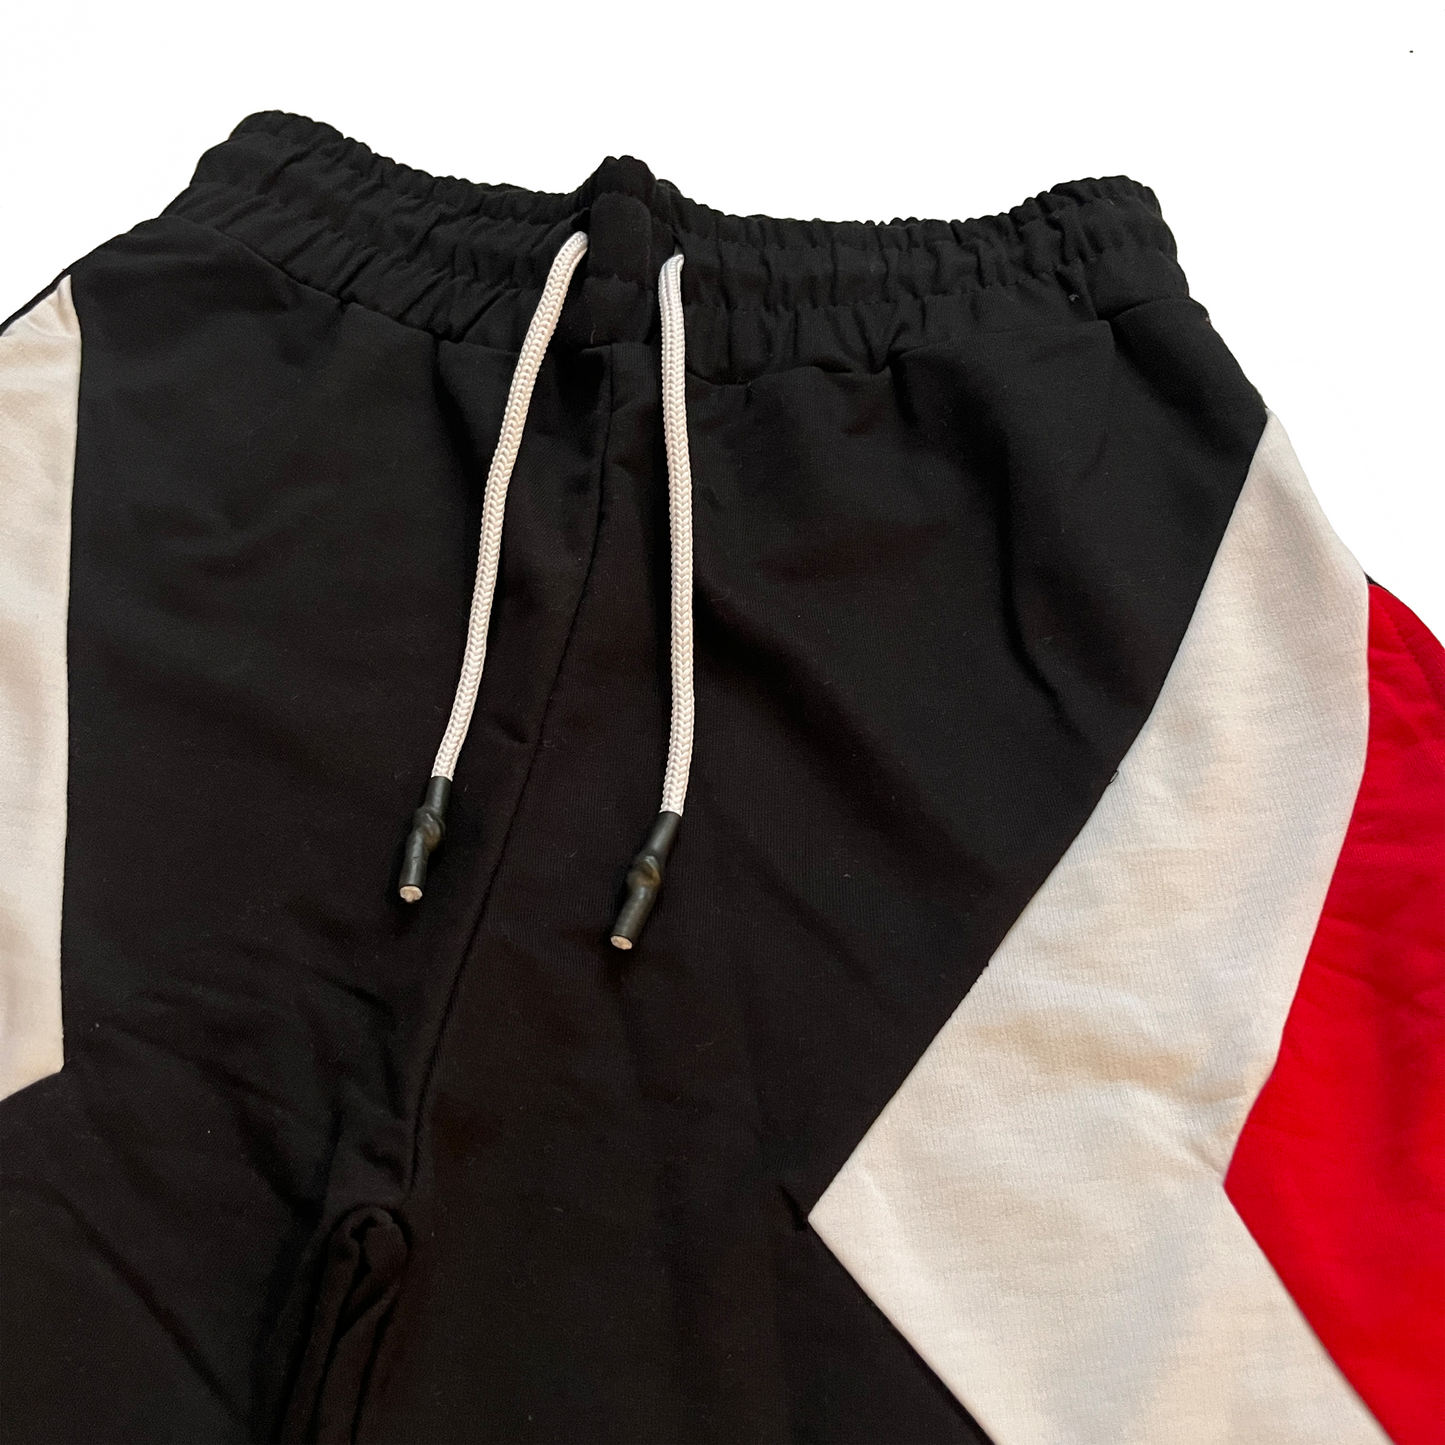 Berland Black Shorts 2-Piece Set